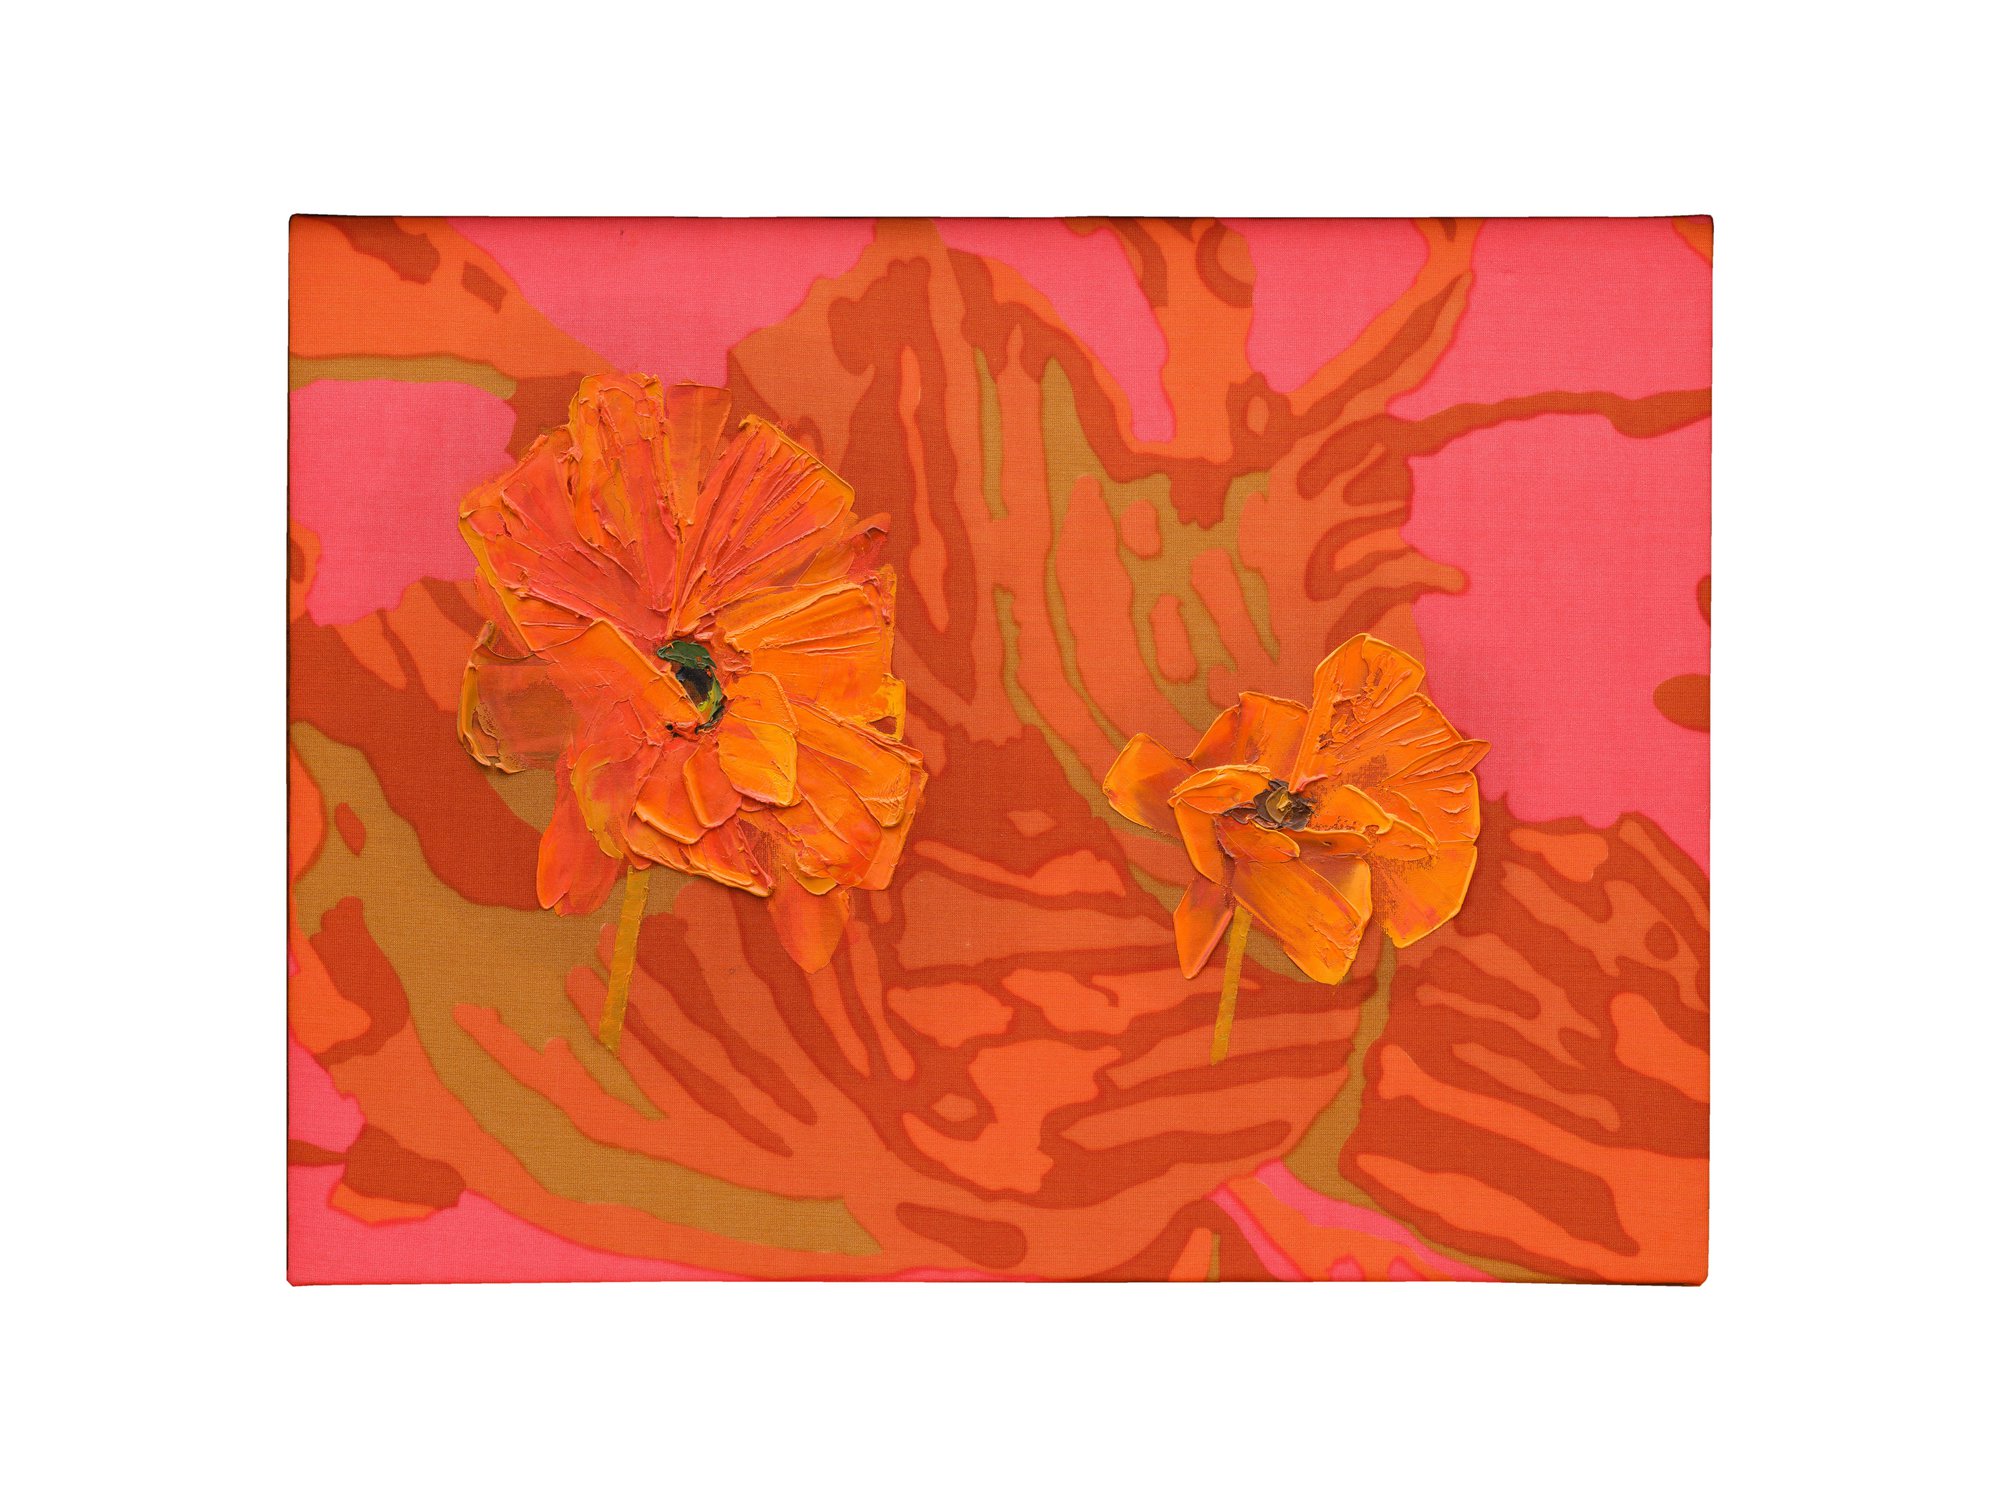 Bernat Klein, Orange Oriental Poppies II, oil on screen printed knitted jersey polyester (Diolen), 1996